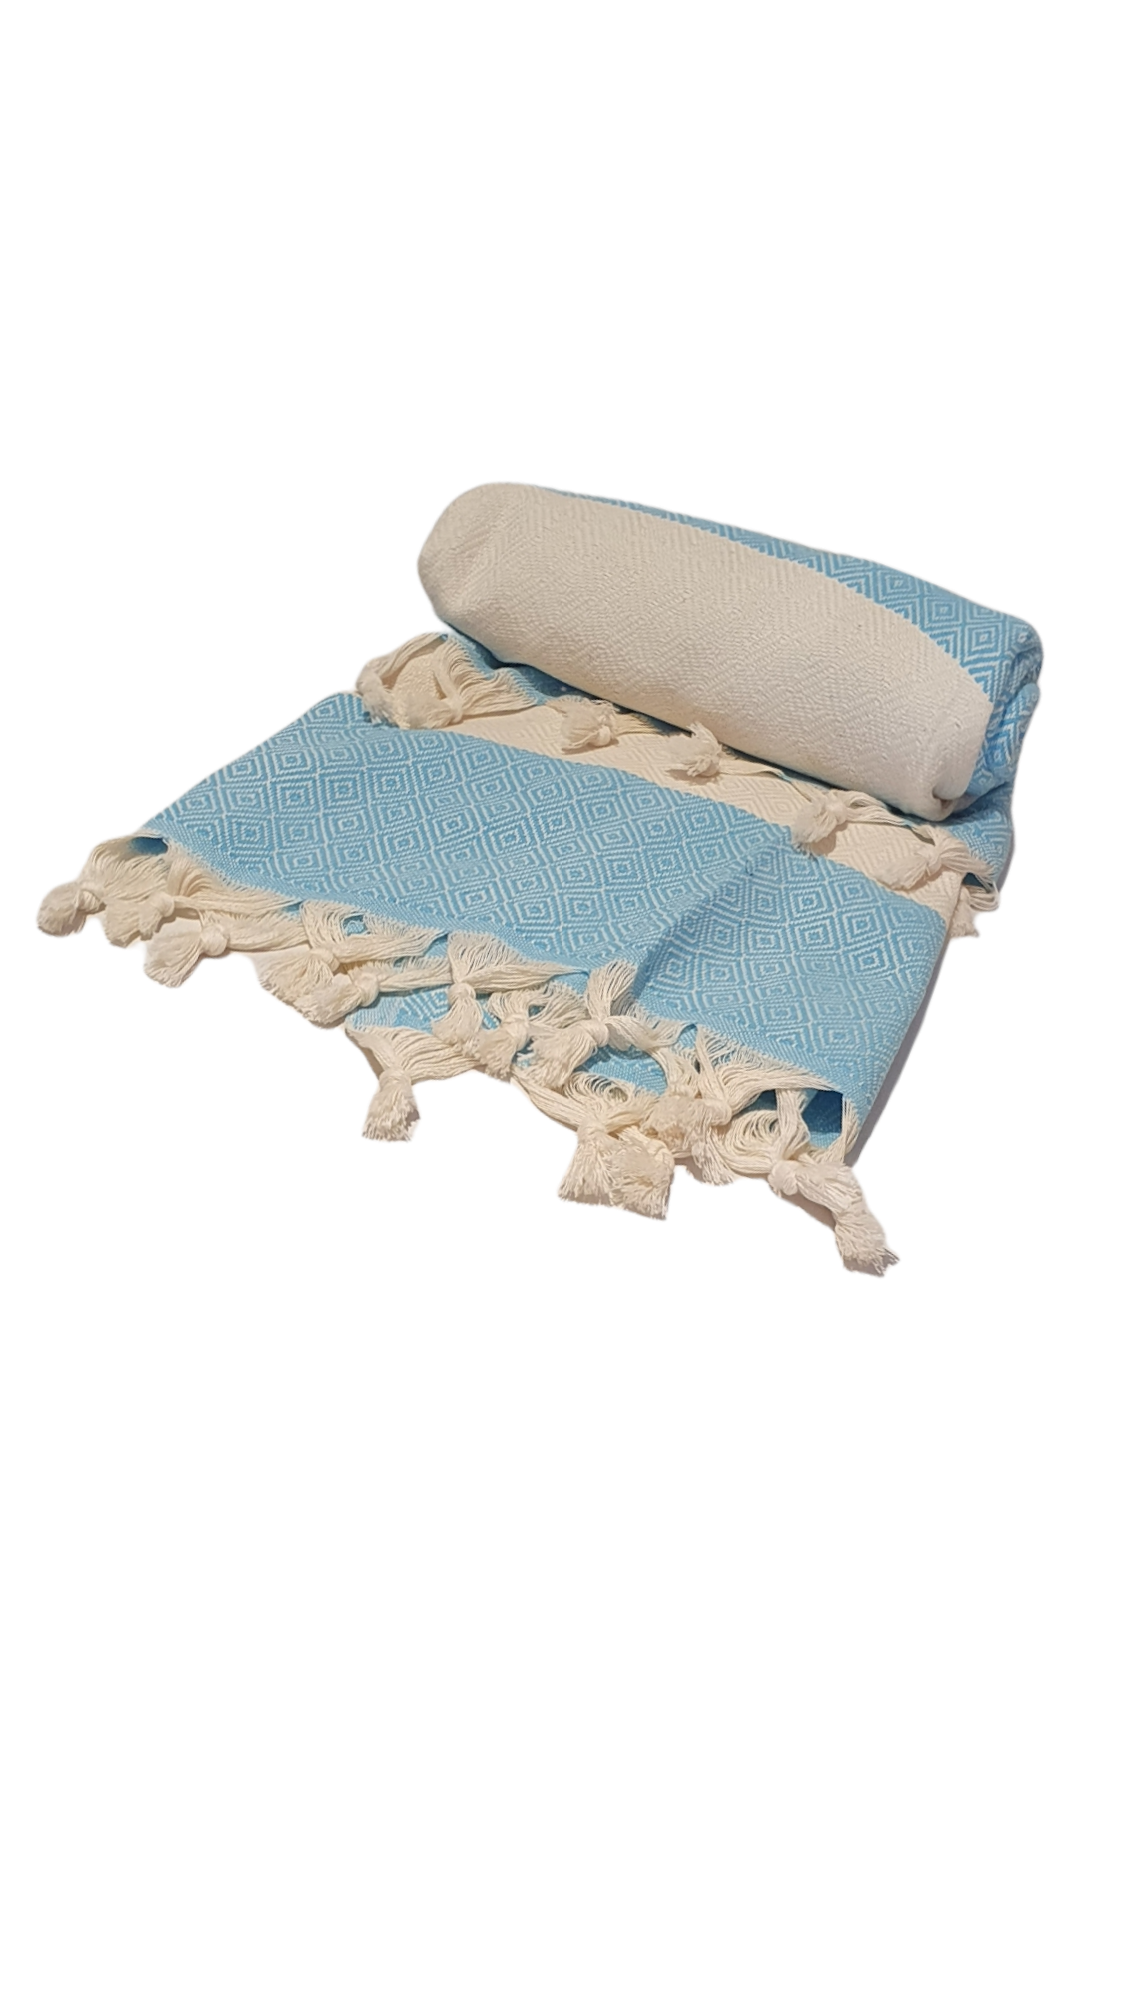  WIIKWEEK Turkish Beach Towels Set of 2, 38”X71” 100% Cotton  Lightweight Turkish Towel, Quick Dry and Portable Fashion Beach Towel :  Home & Kitchen